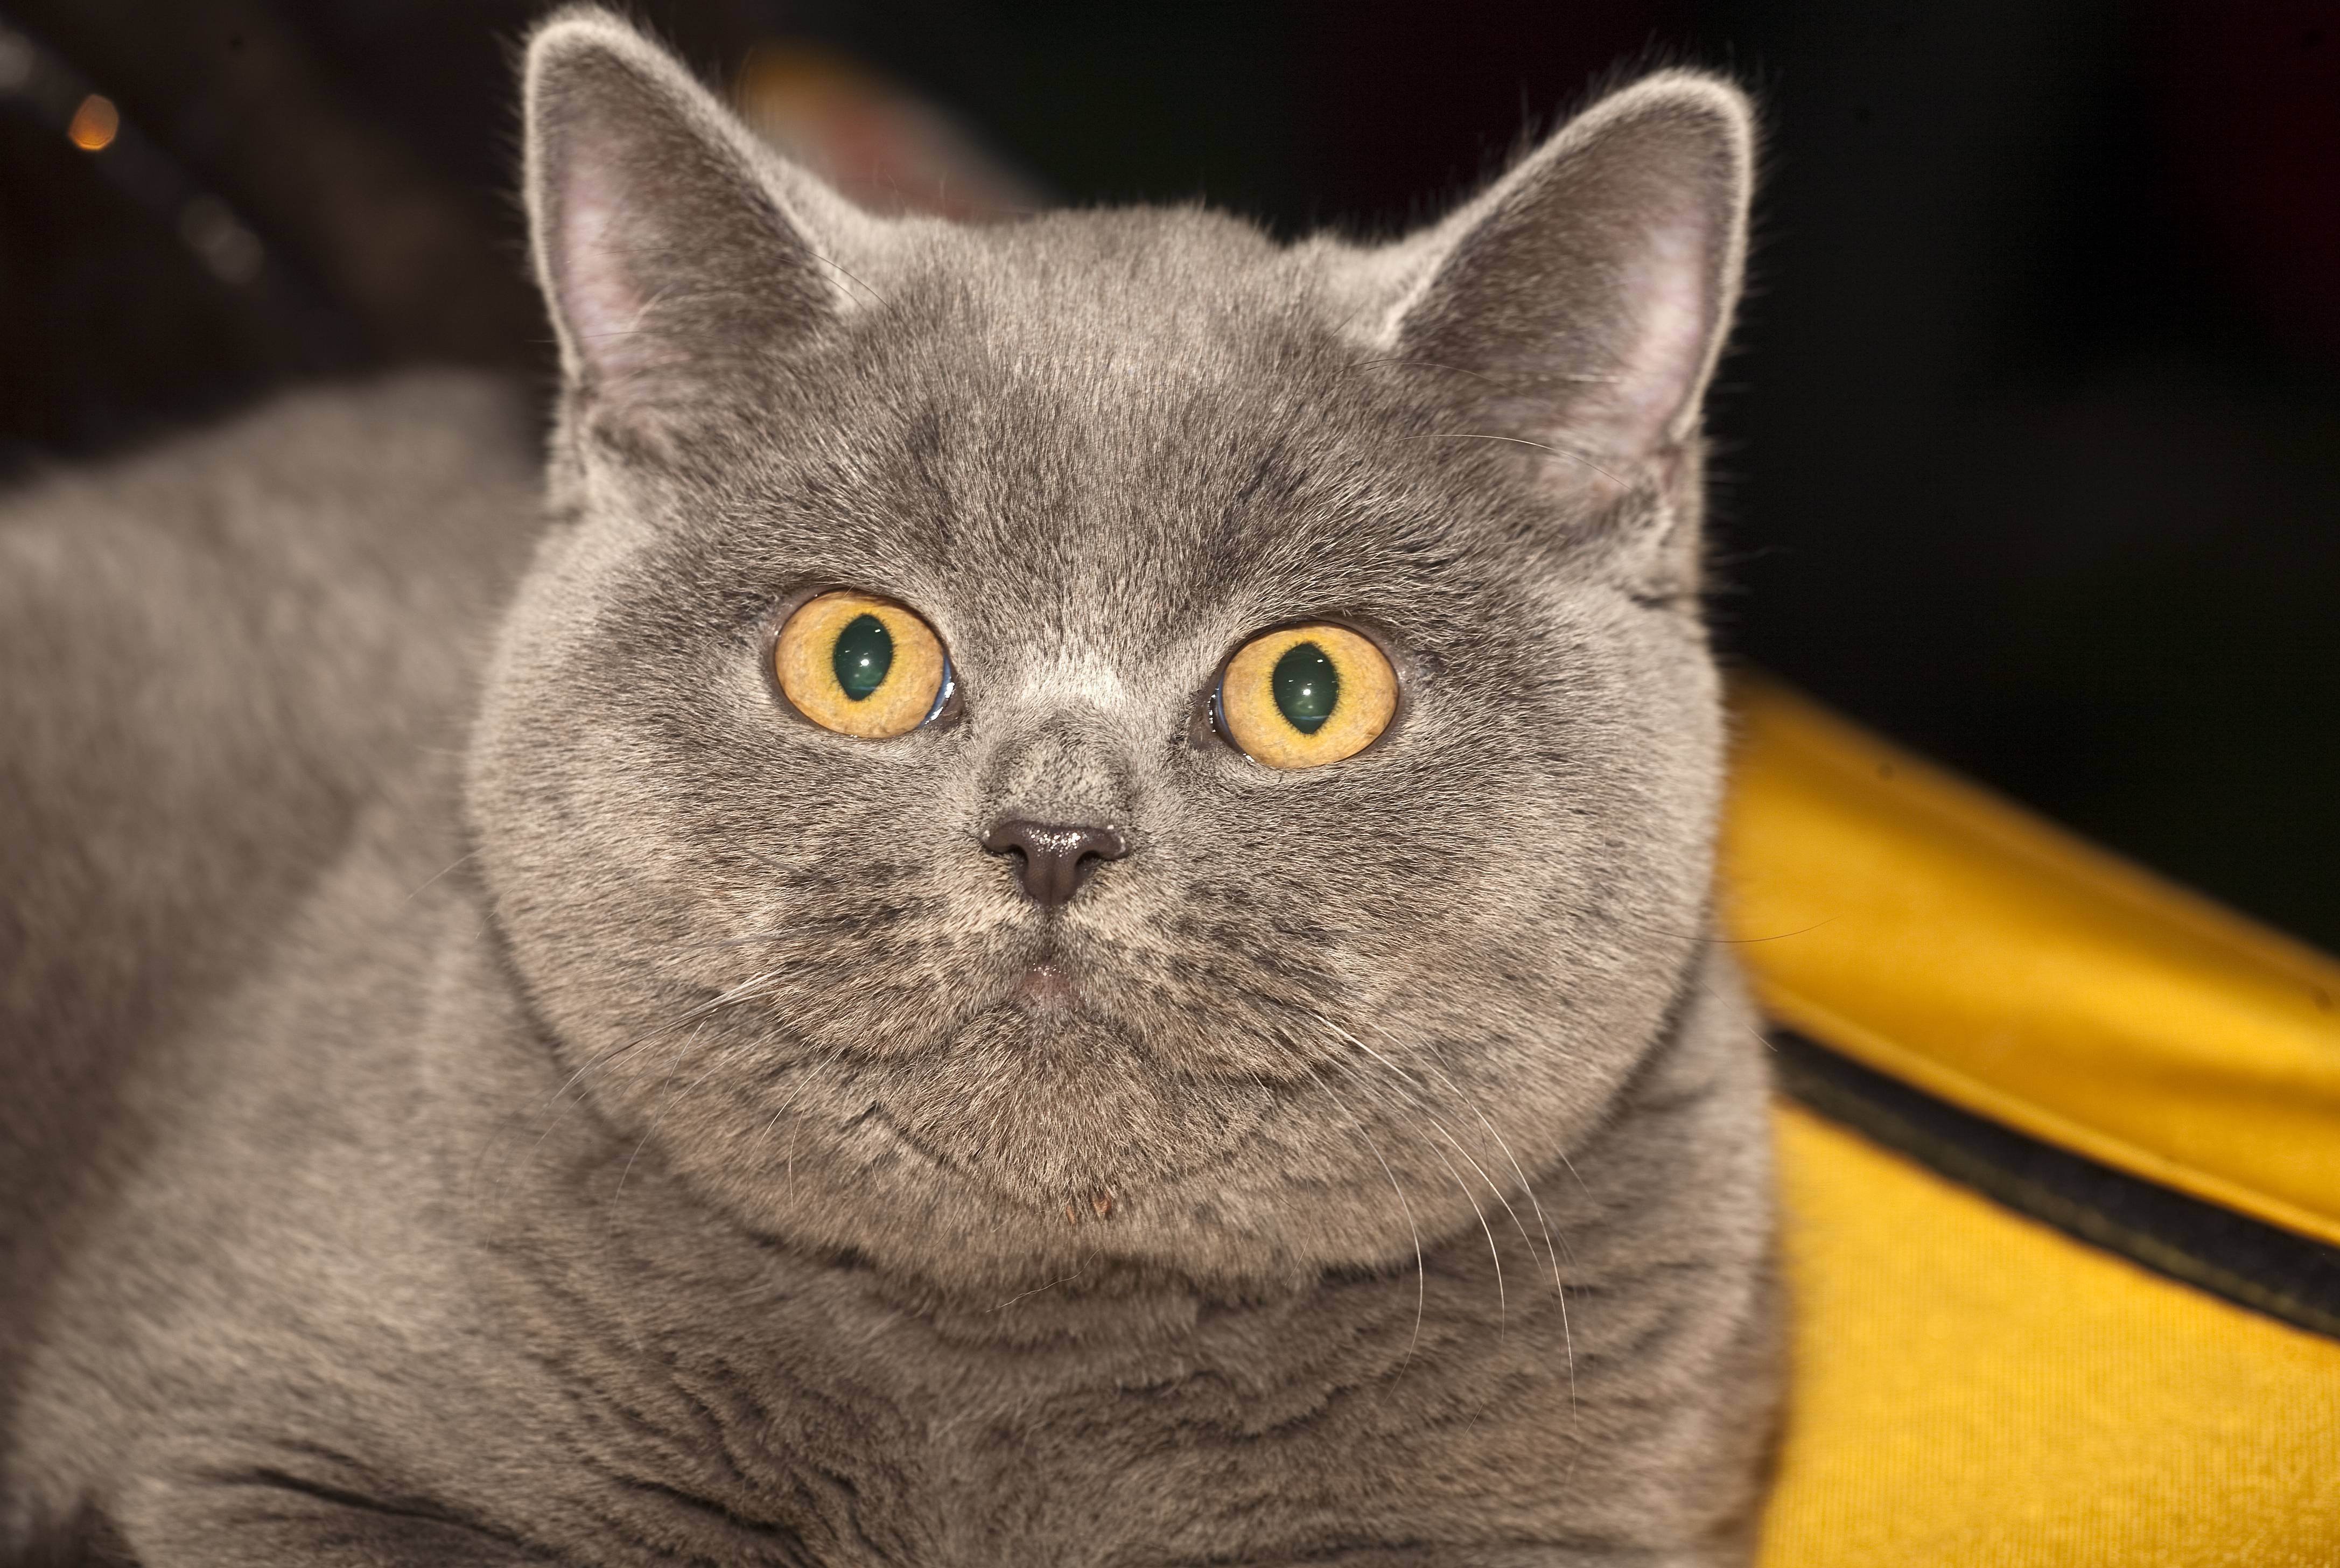 Цвет глаз у британских кошек